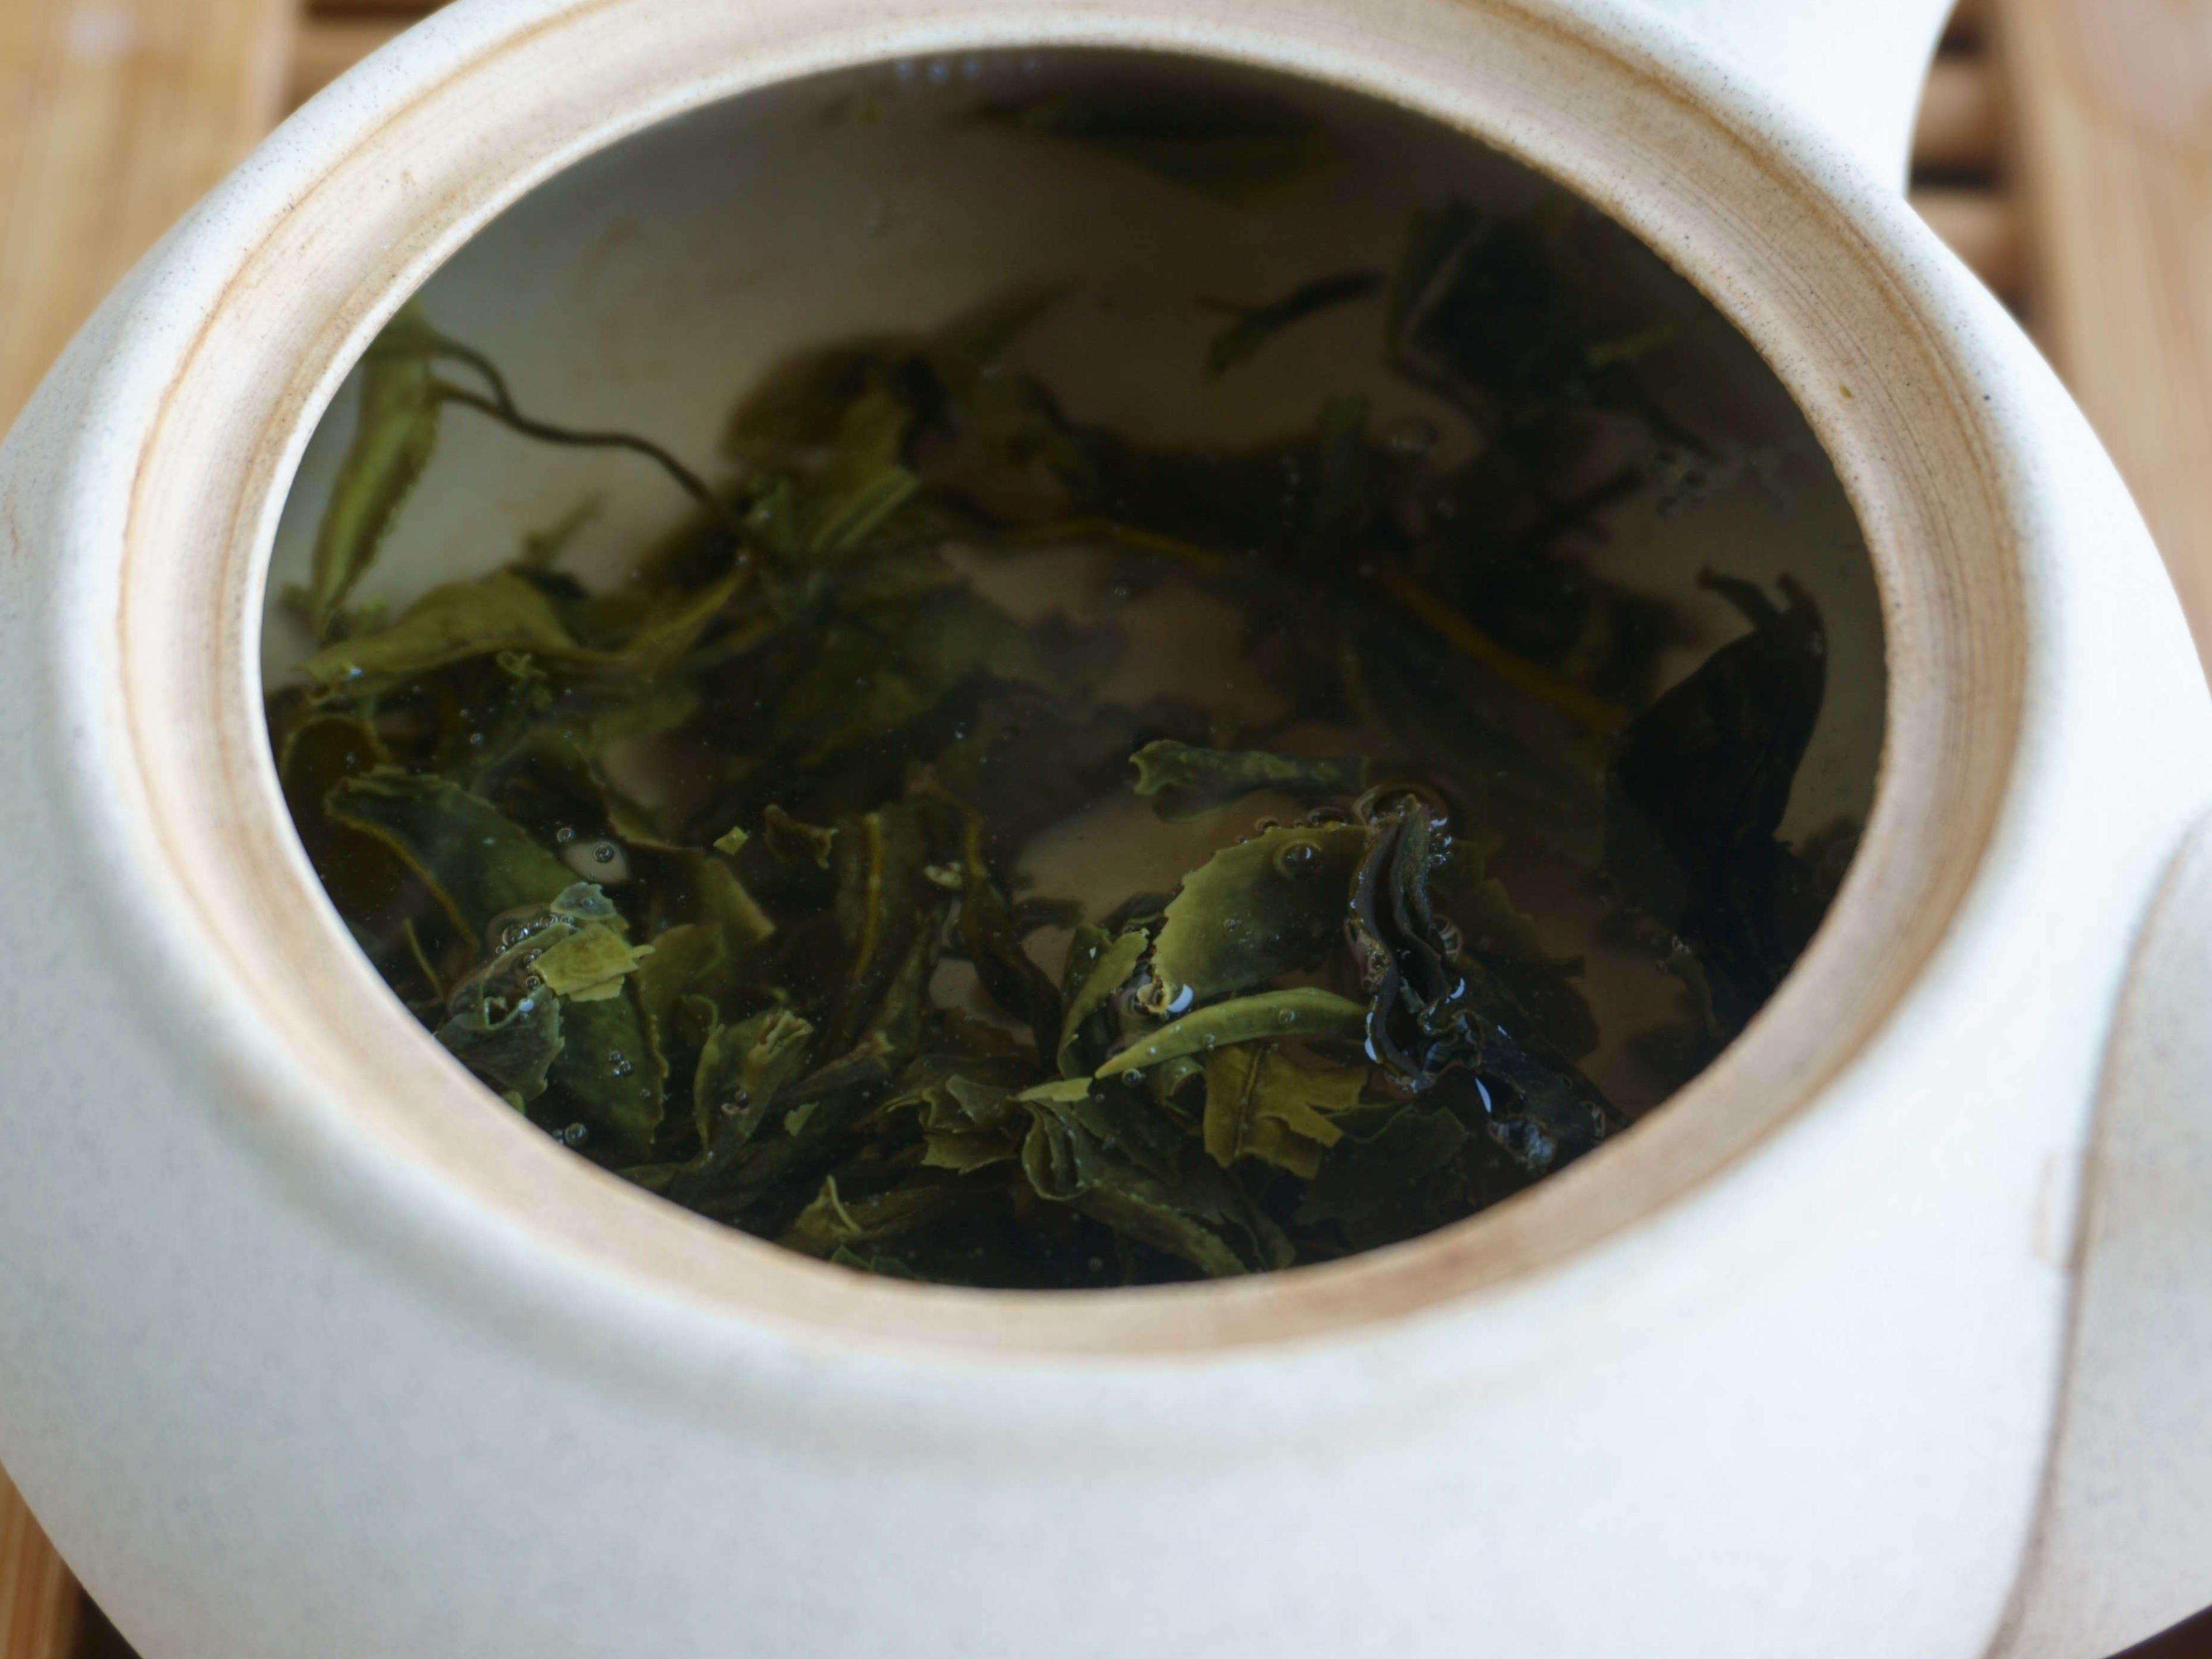 Le foglie di tè in infusione